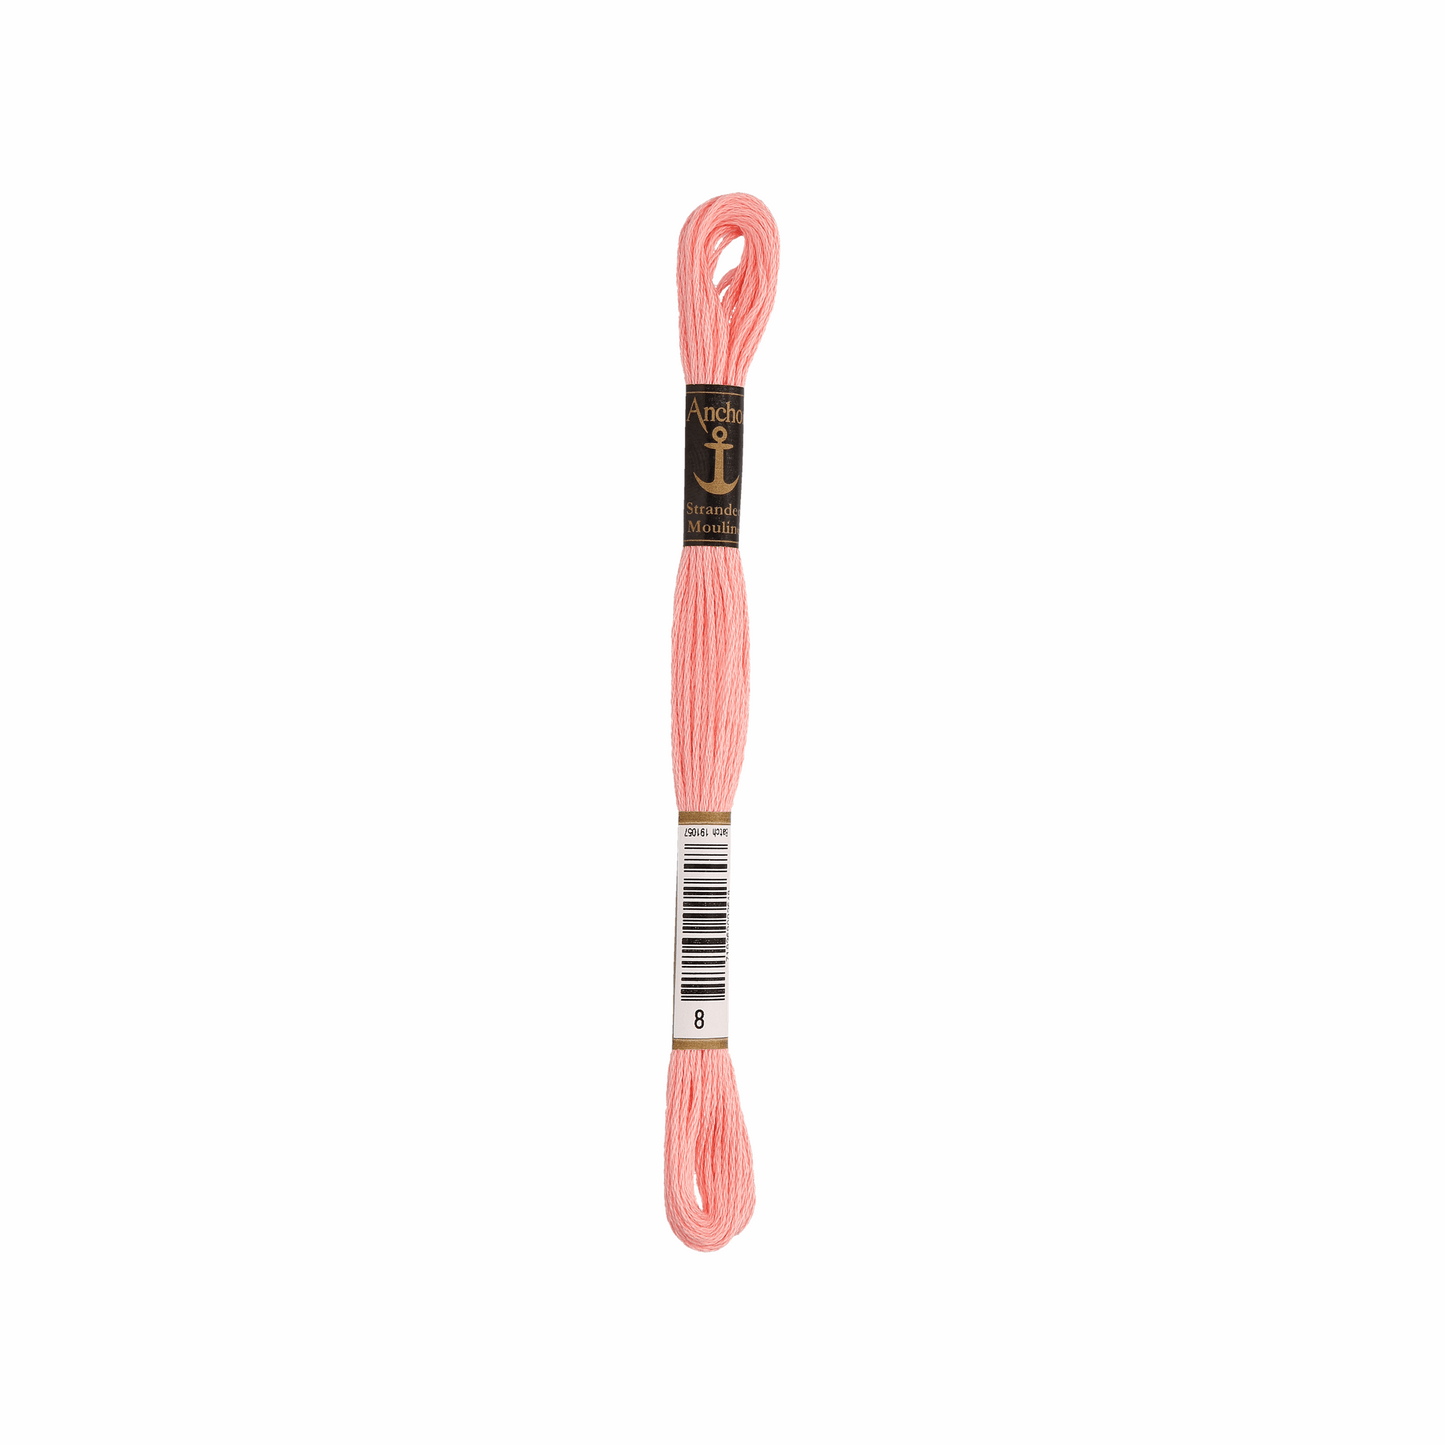 Anchor embroidery thread, 2g, colour 8 salmon pink